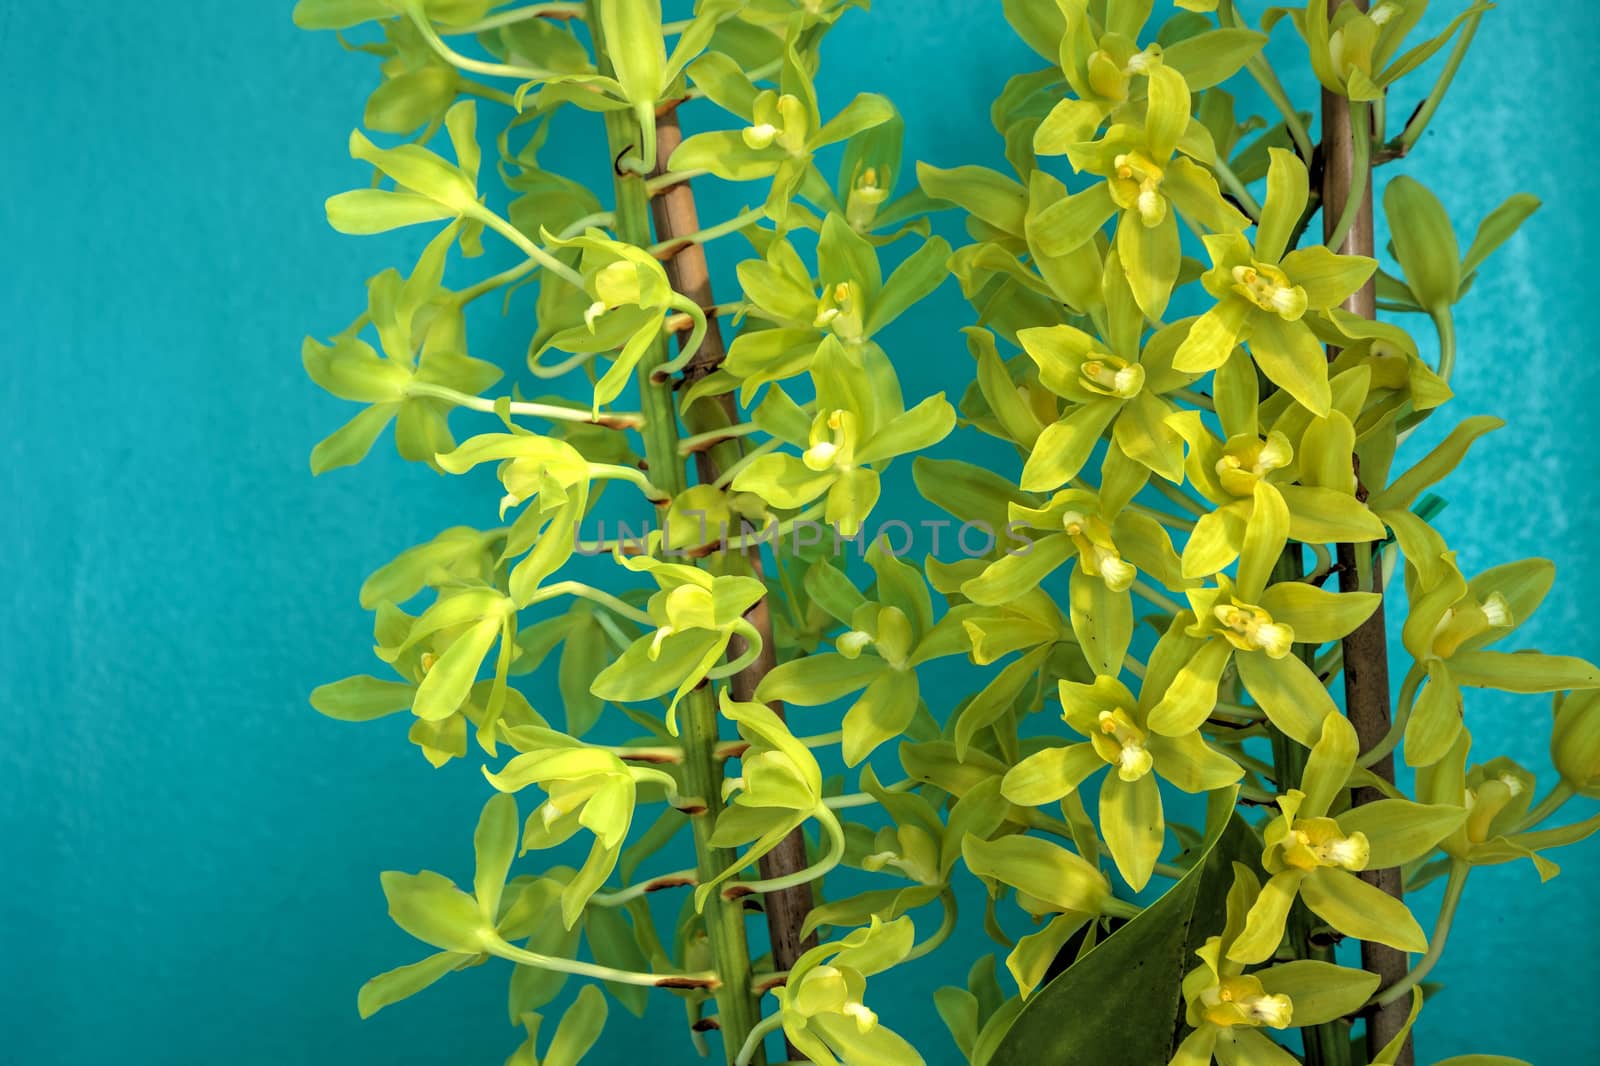 Green tropical Grammatophyllum scriptum var citrinum orchid flowers cluster on a stalk against a bright aqua blue background.